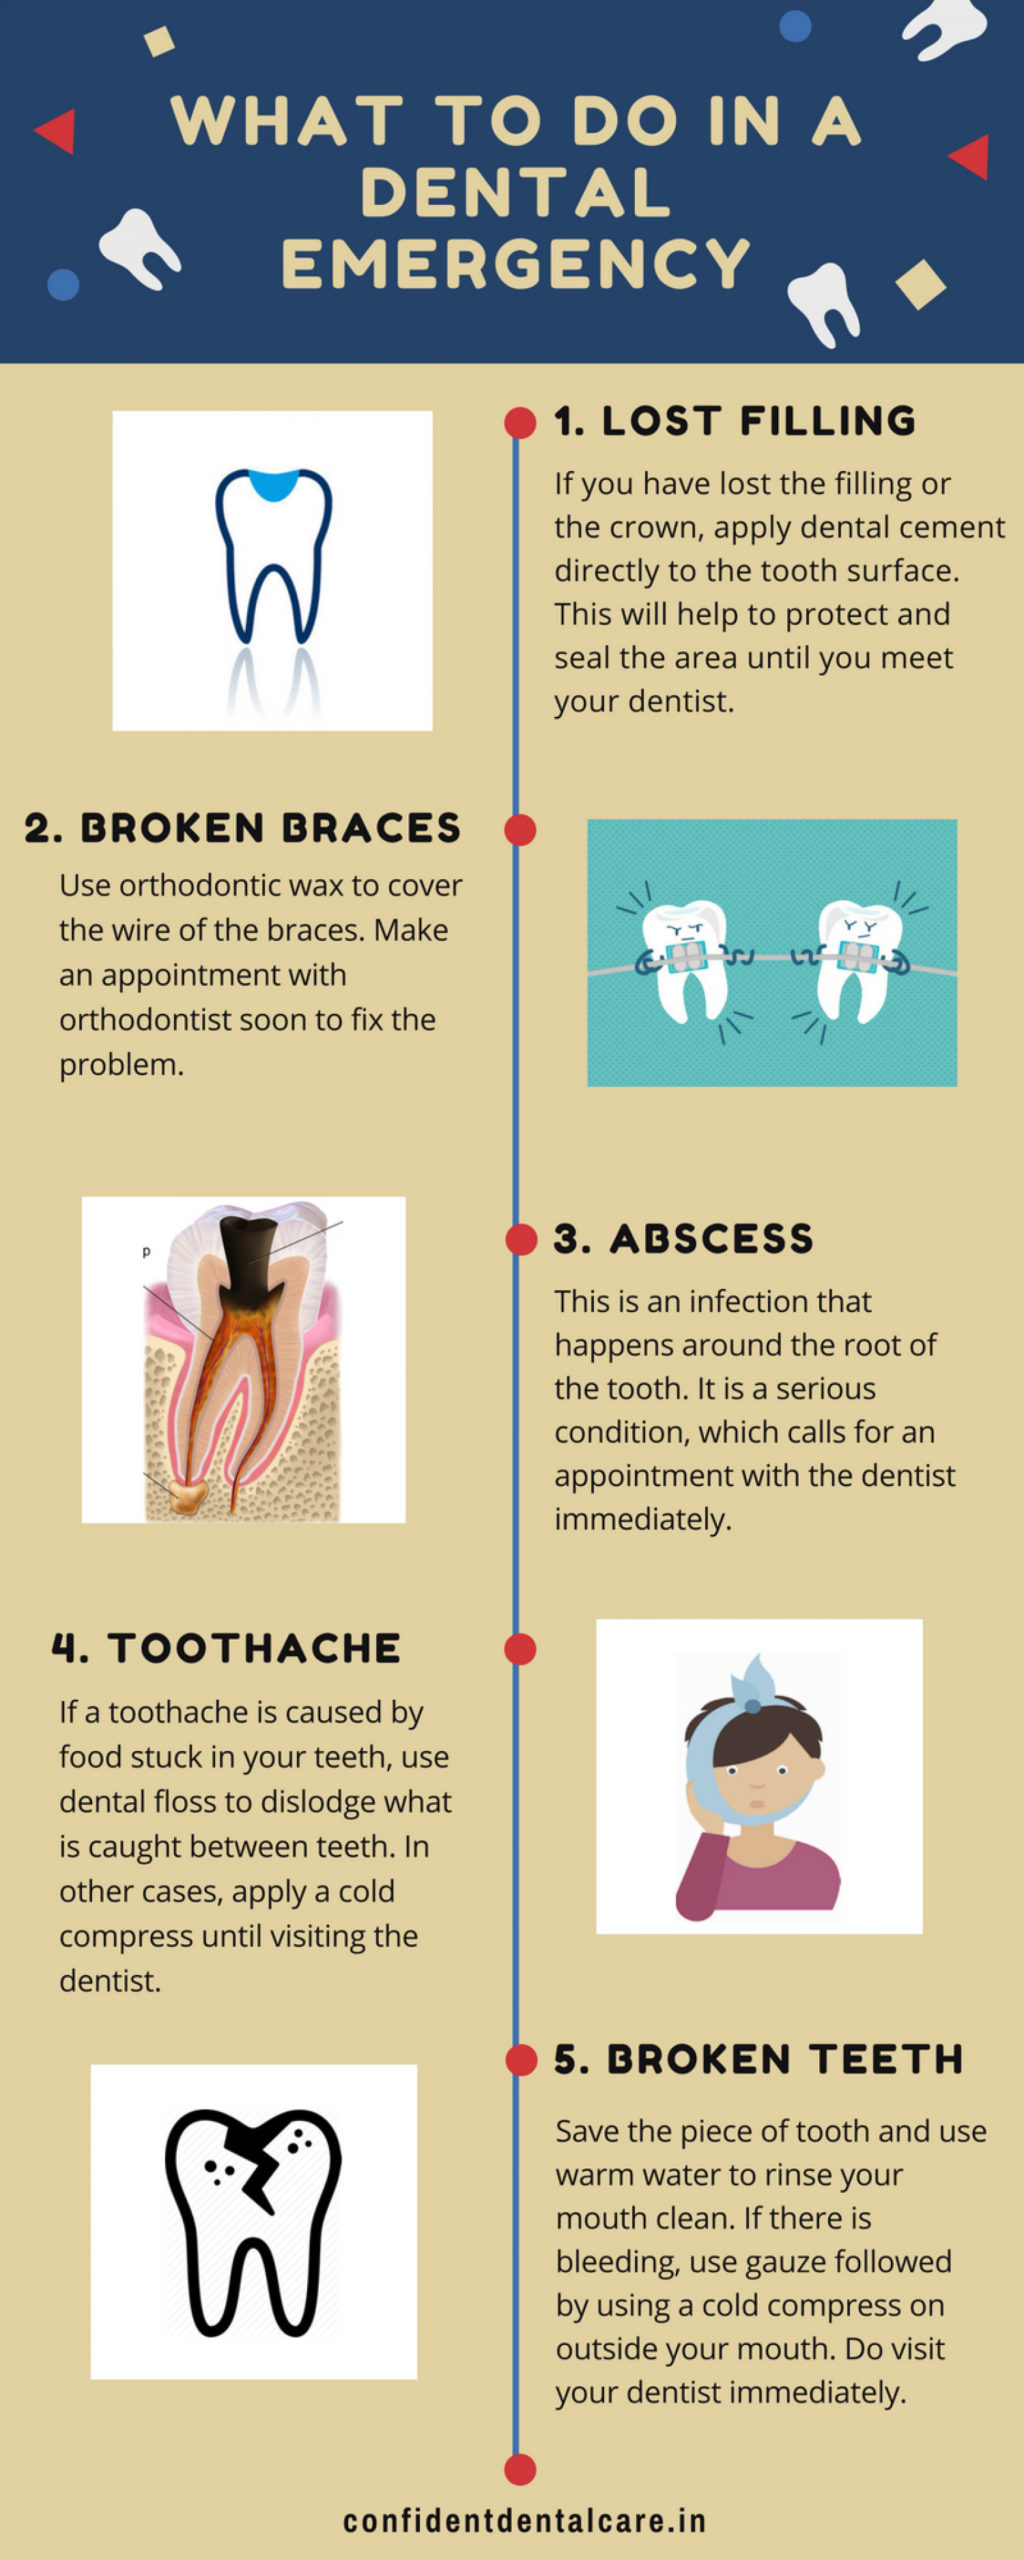 What To Do In A Dental Emergency - Woodbridge Virginia - Dental Emergency Infographic